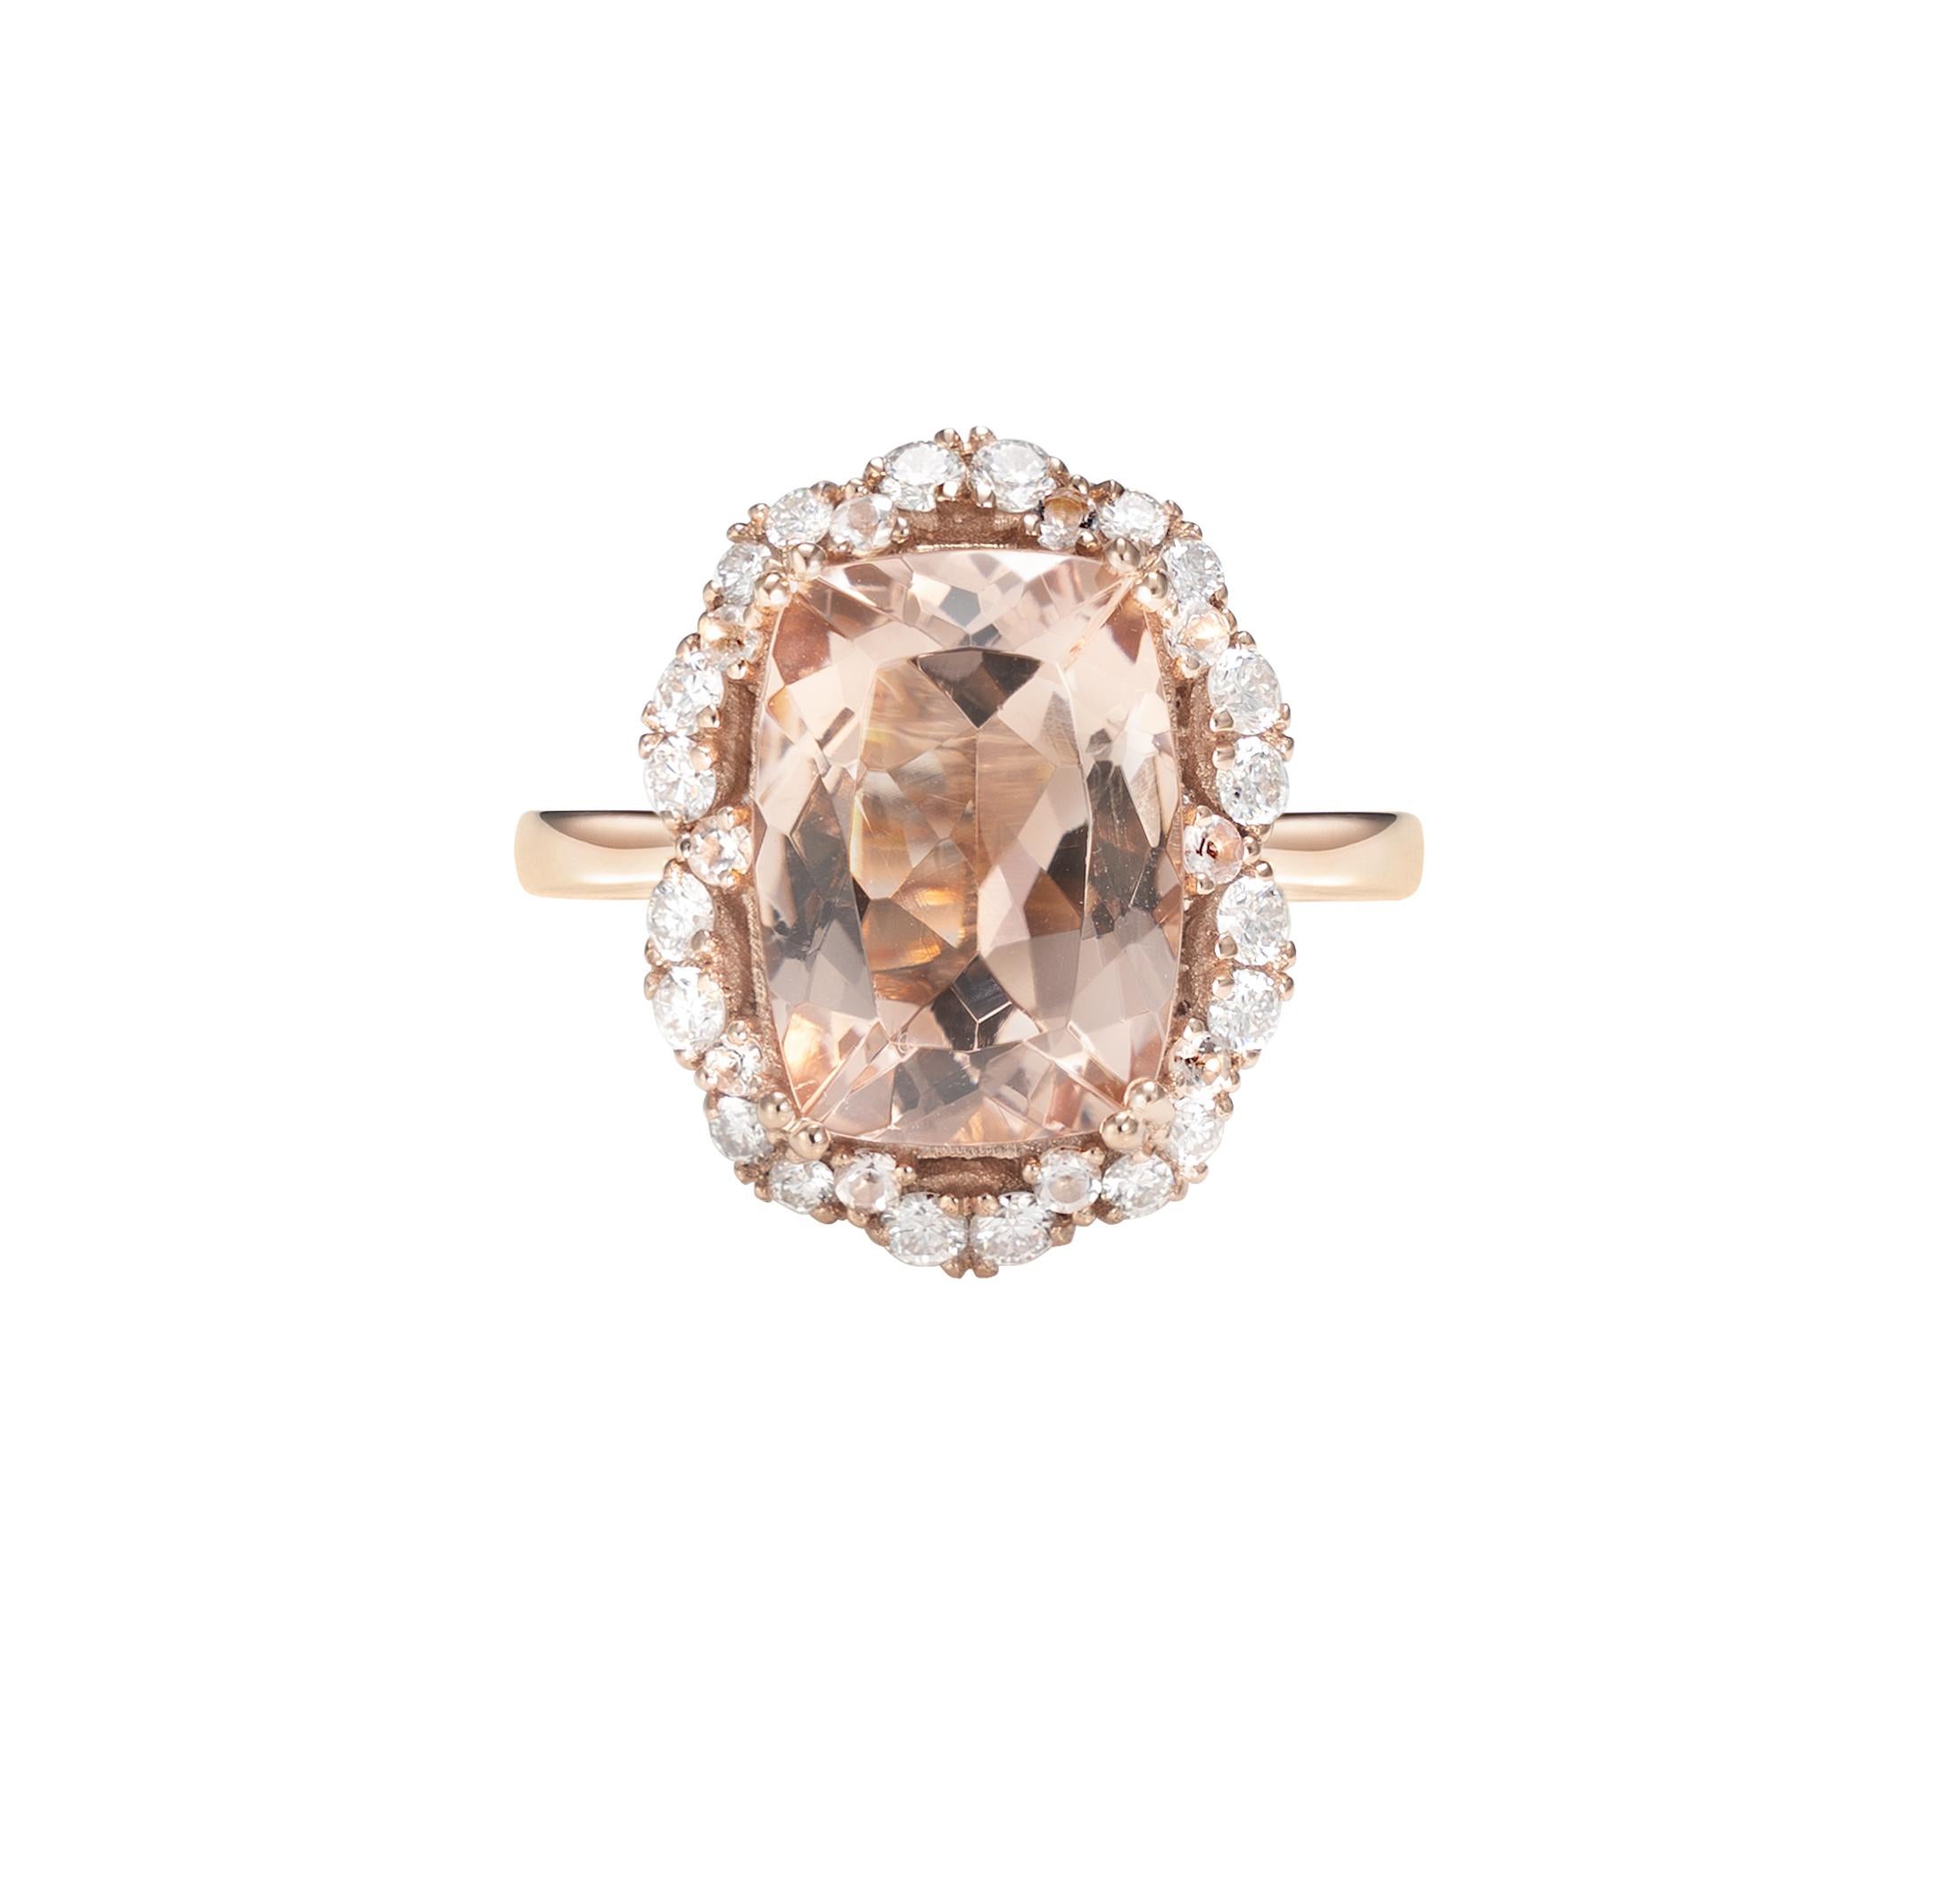 Cushion Cut 6.4 Carat Morganite and Diamond Ring in 18 Karat Rose Gold For Sale